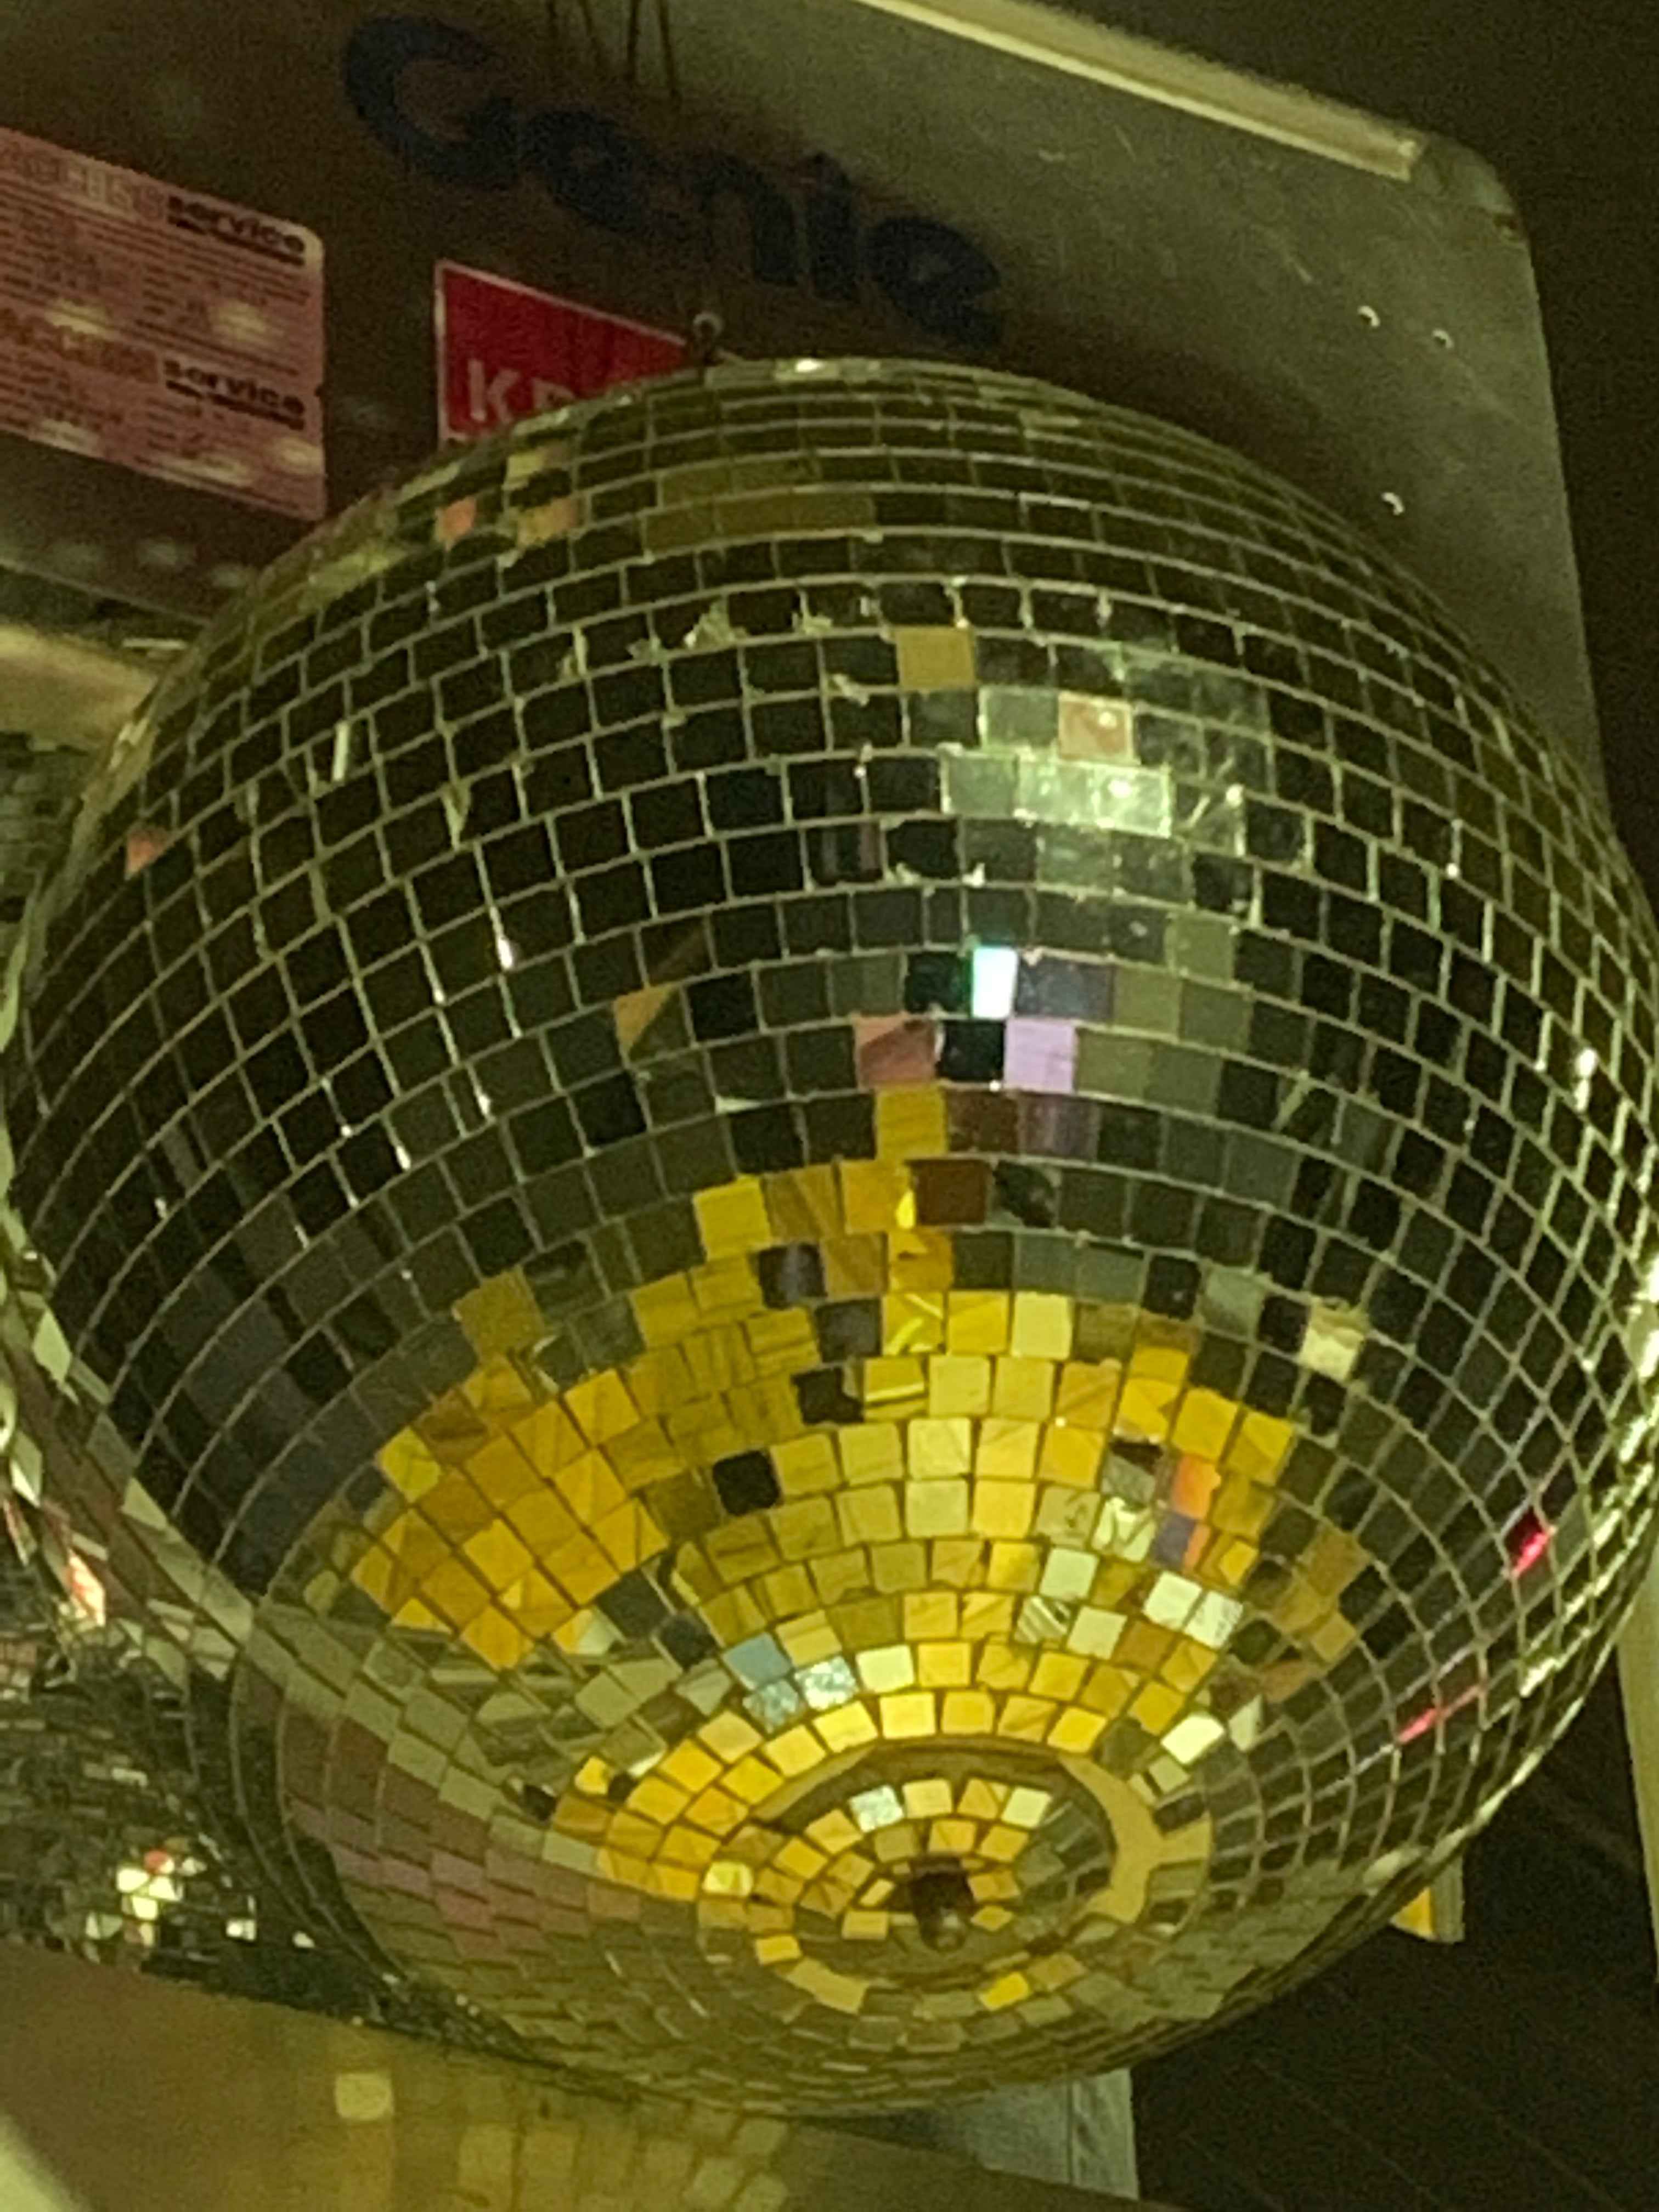 Glitter/Disco Ball